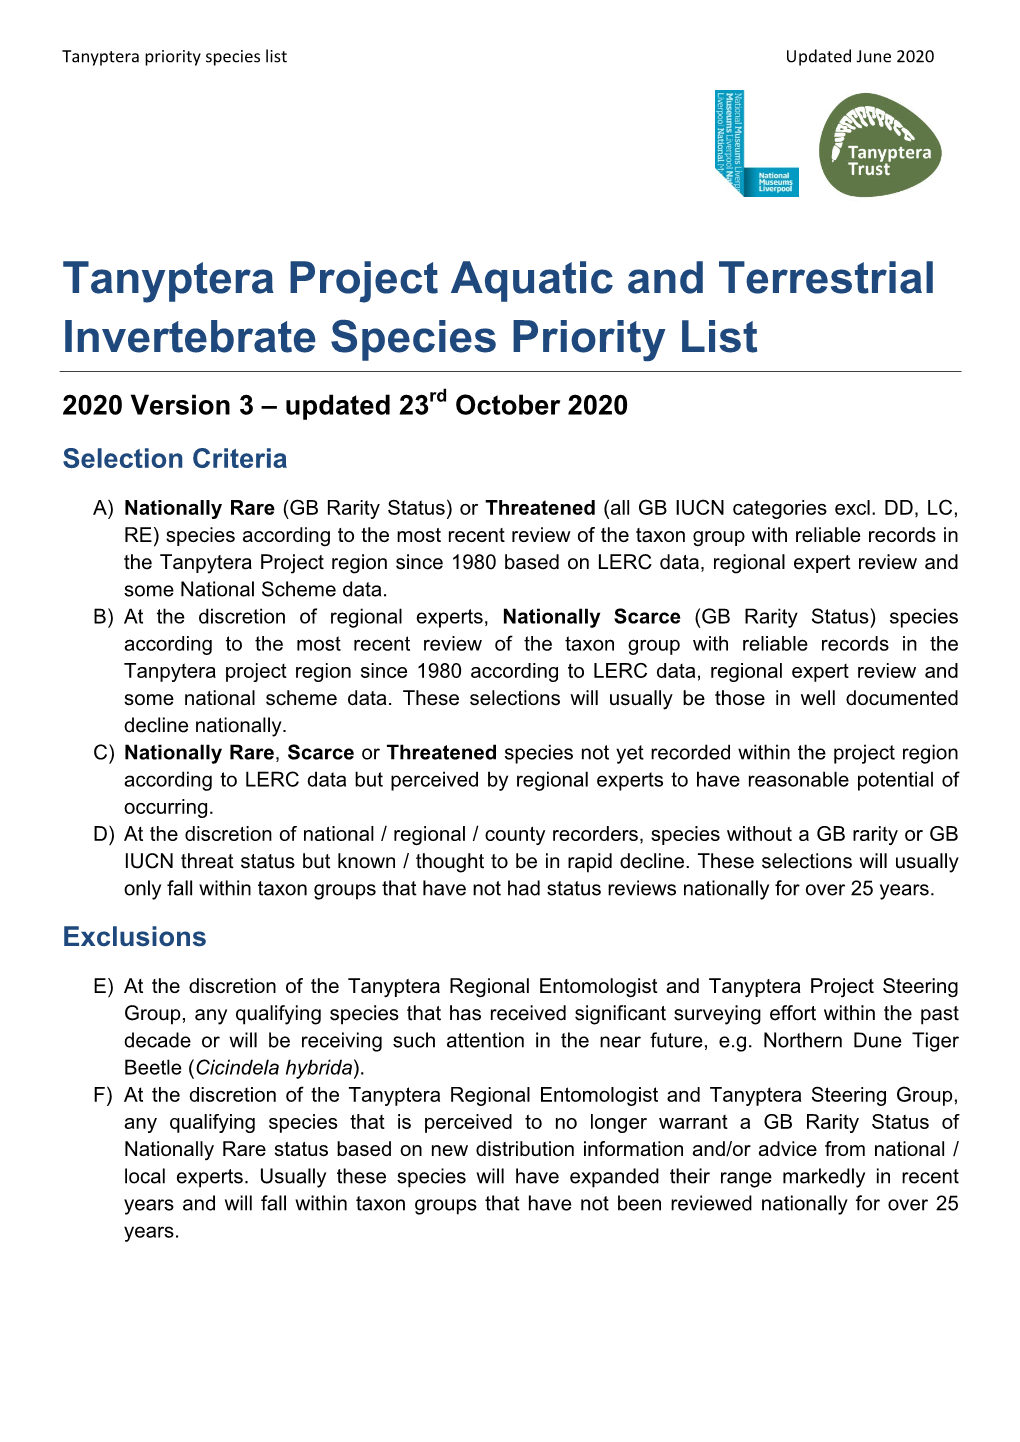 Tanyptera Project Aquatic and Terrestrial Invertebrate Species Priority List